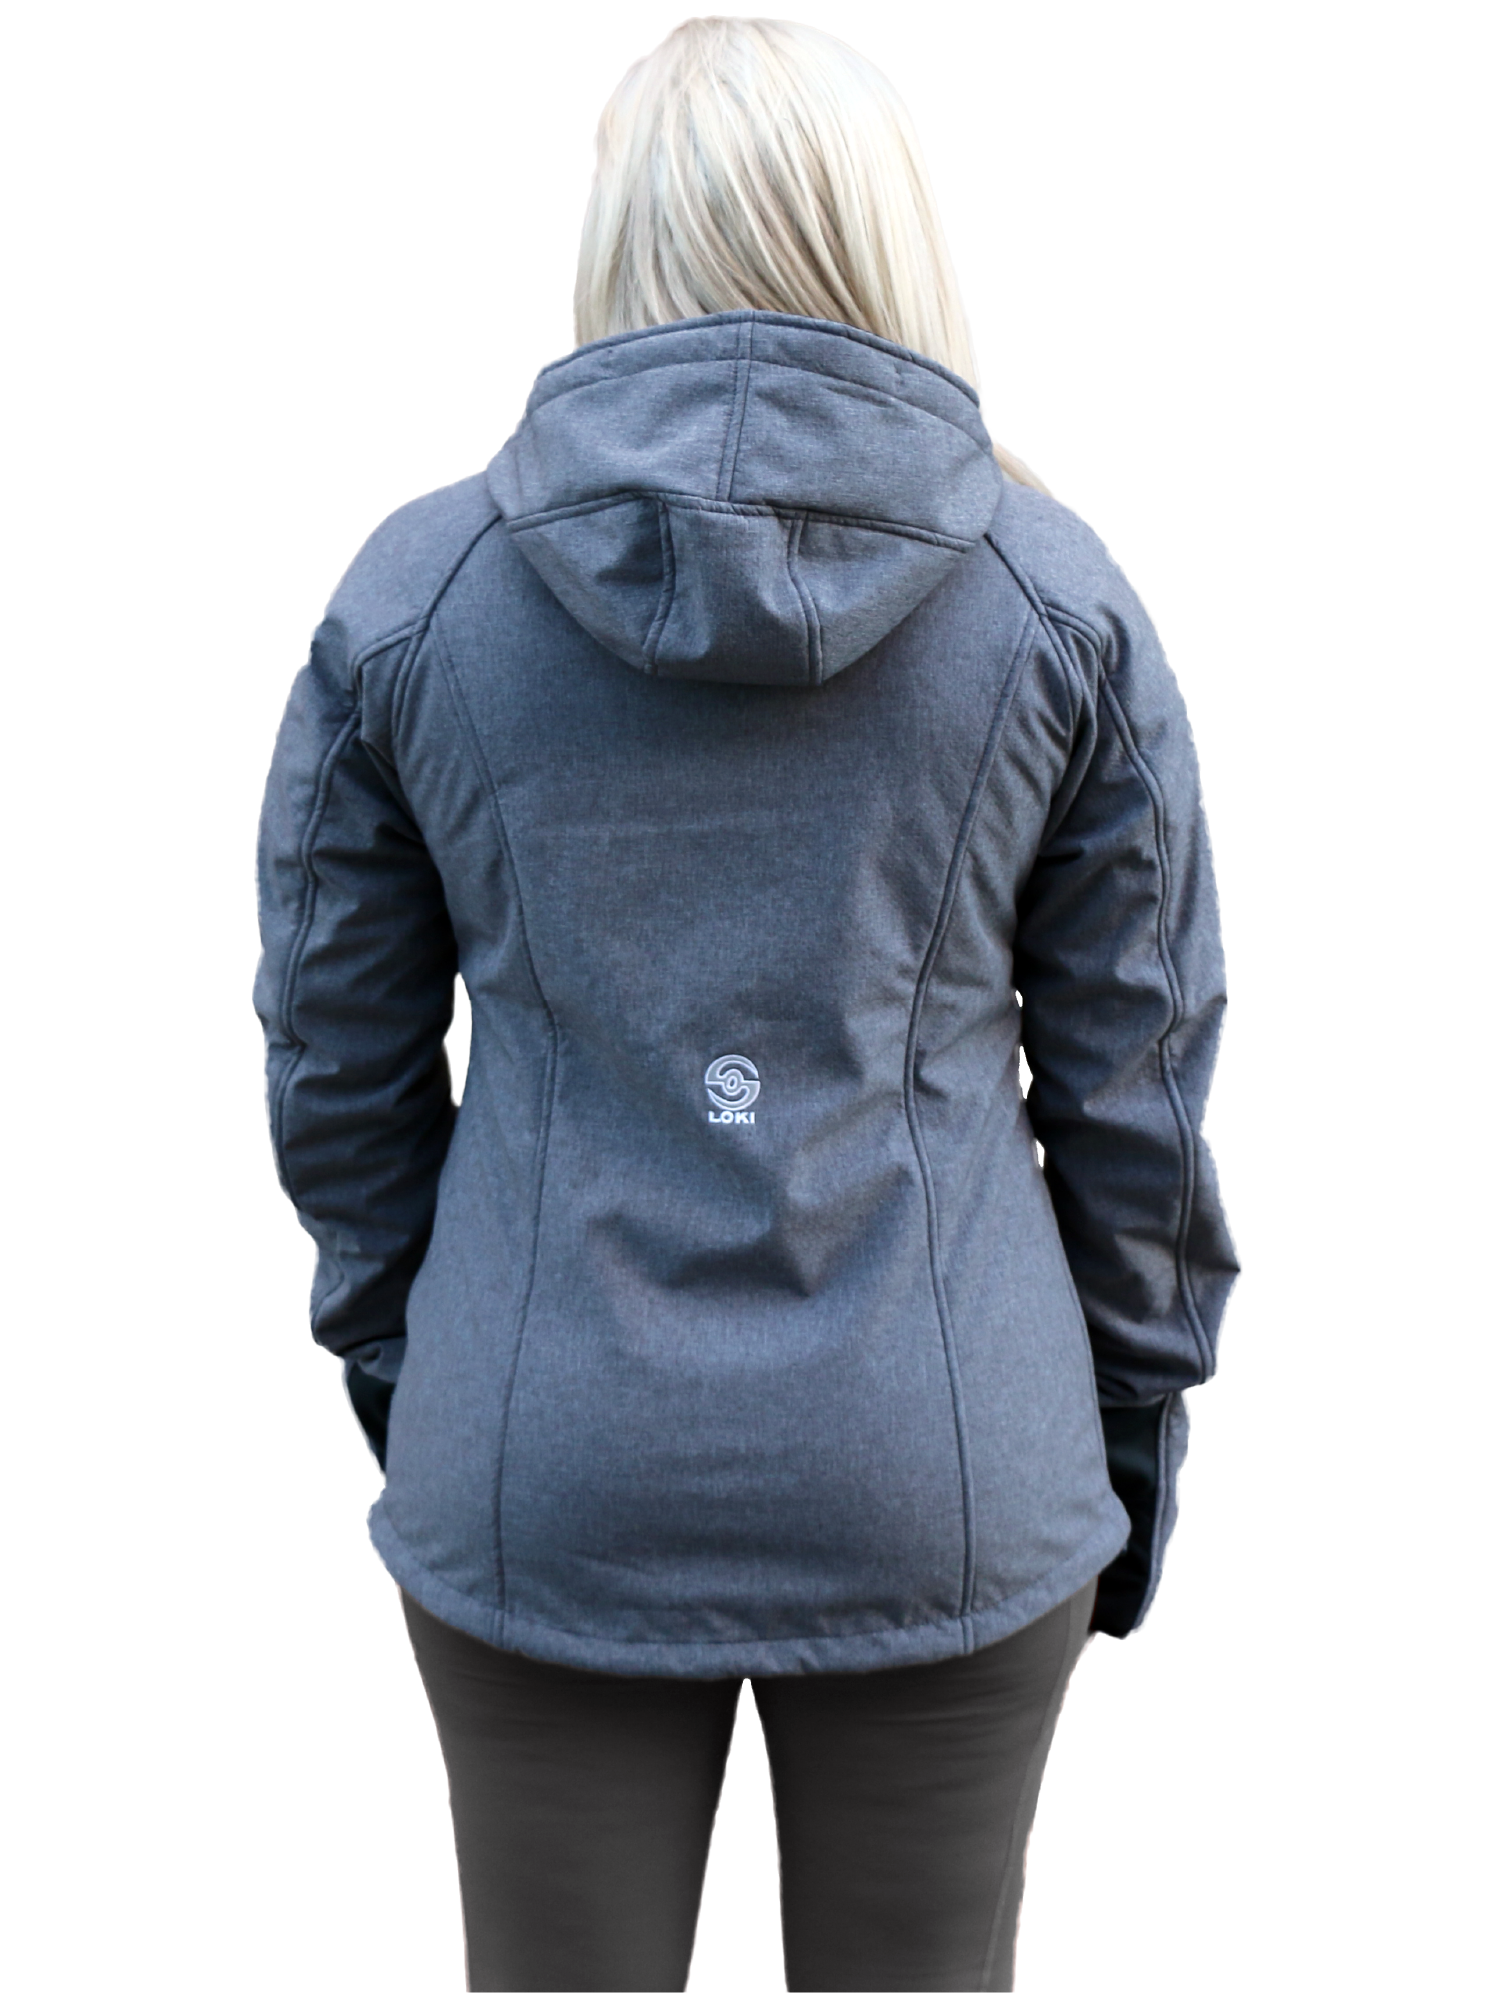 Women's Mountain Jacket - Forged Iron (Back)